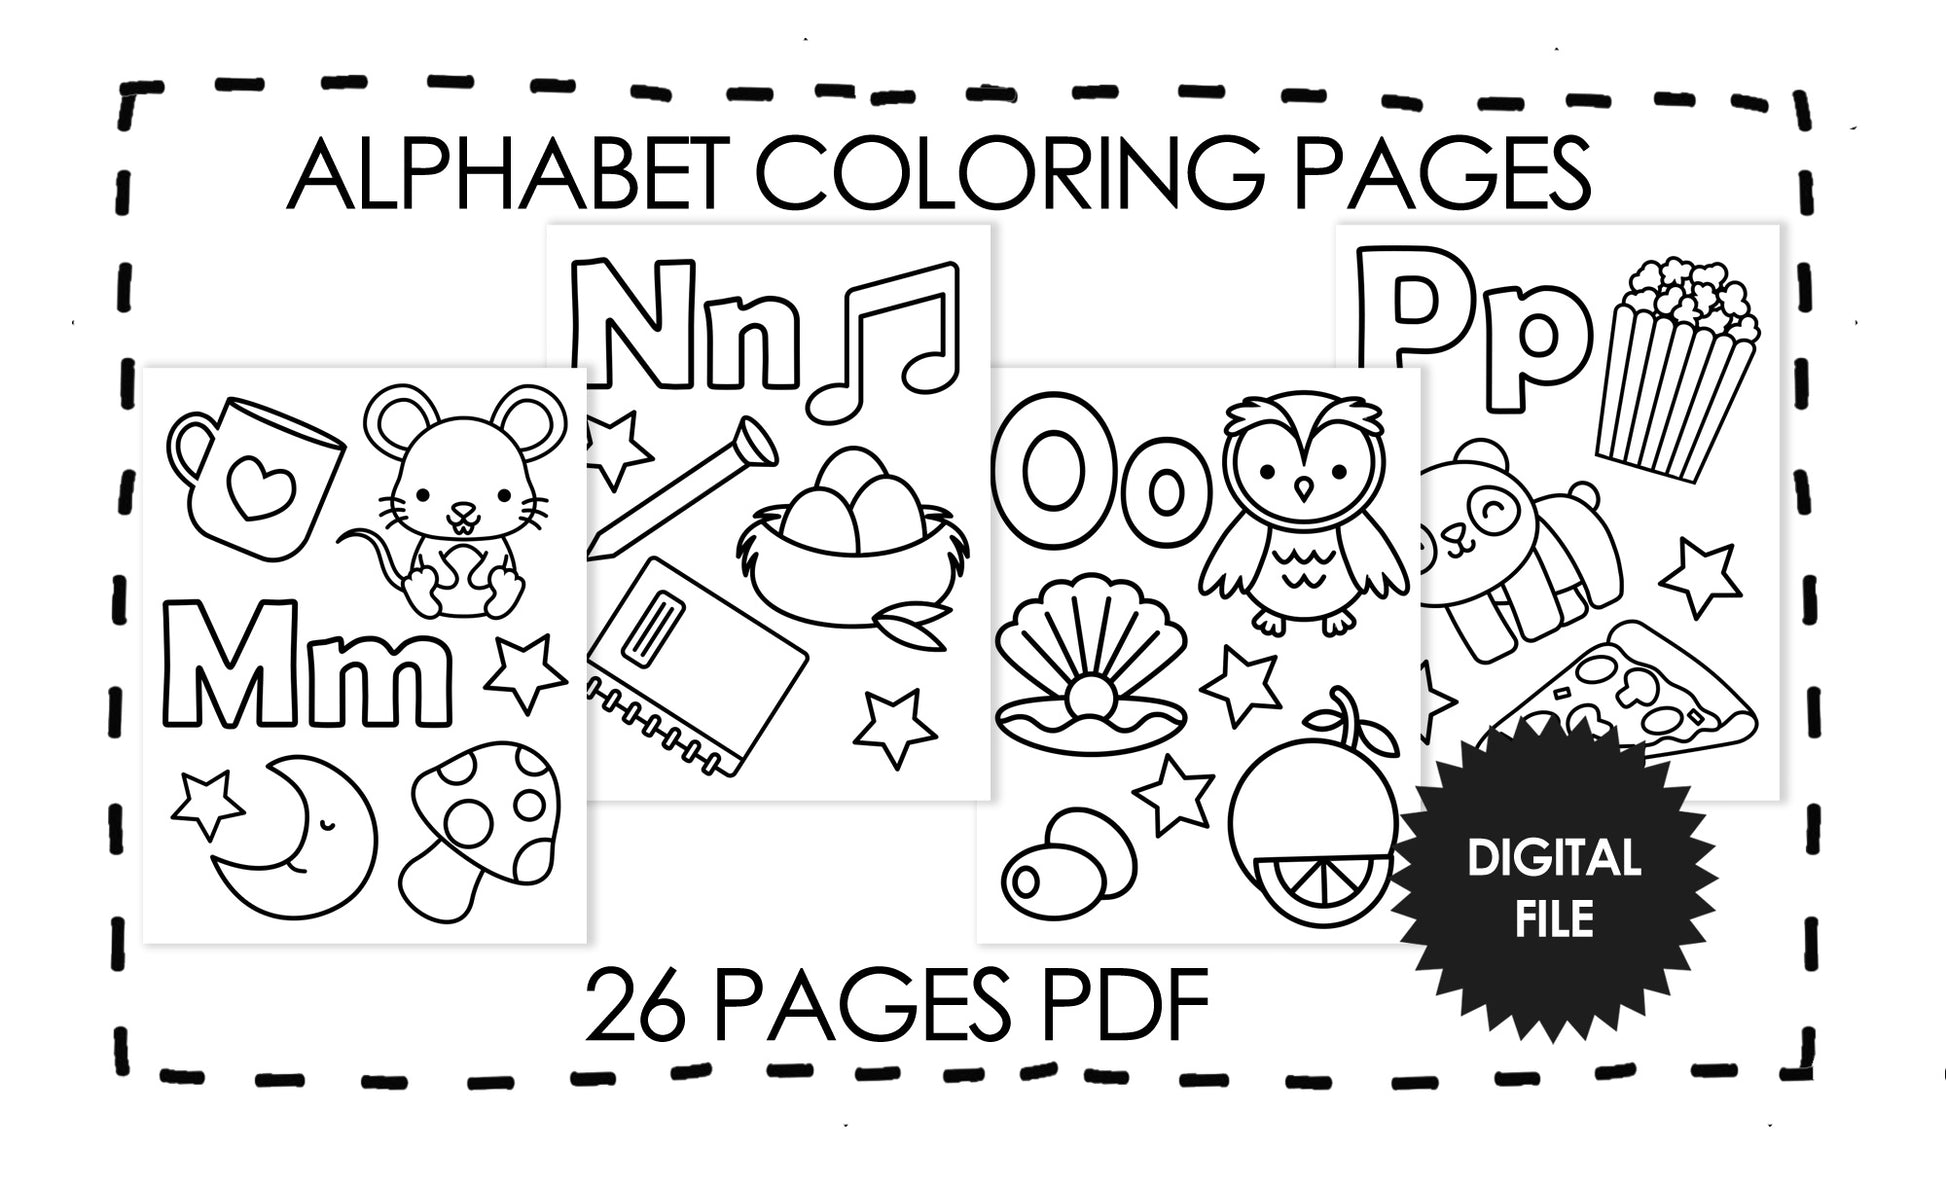 Alphabet coloring pages for kids preschool abc coloring book kids pr â she